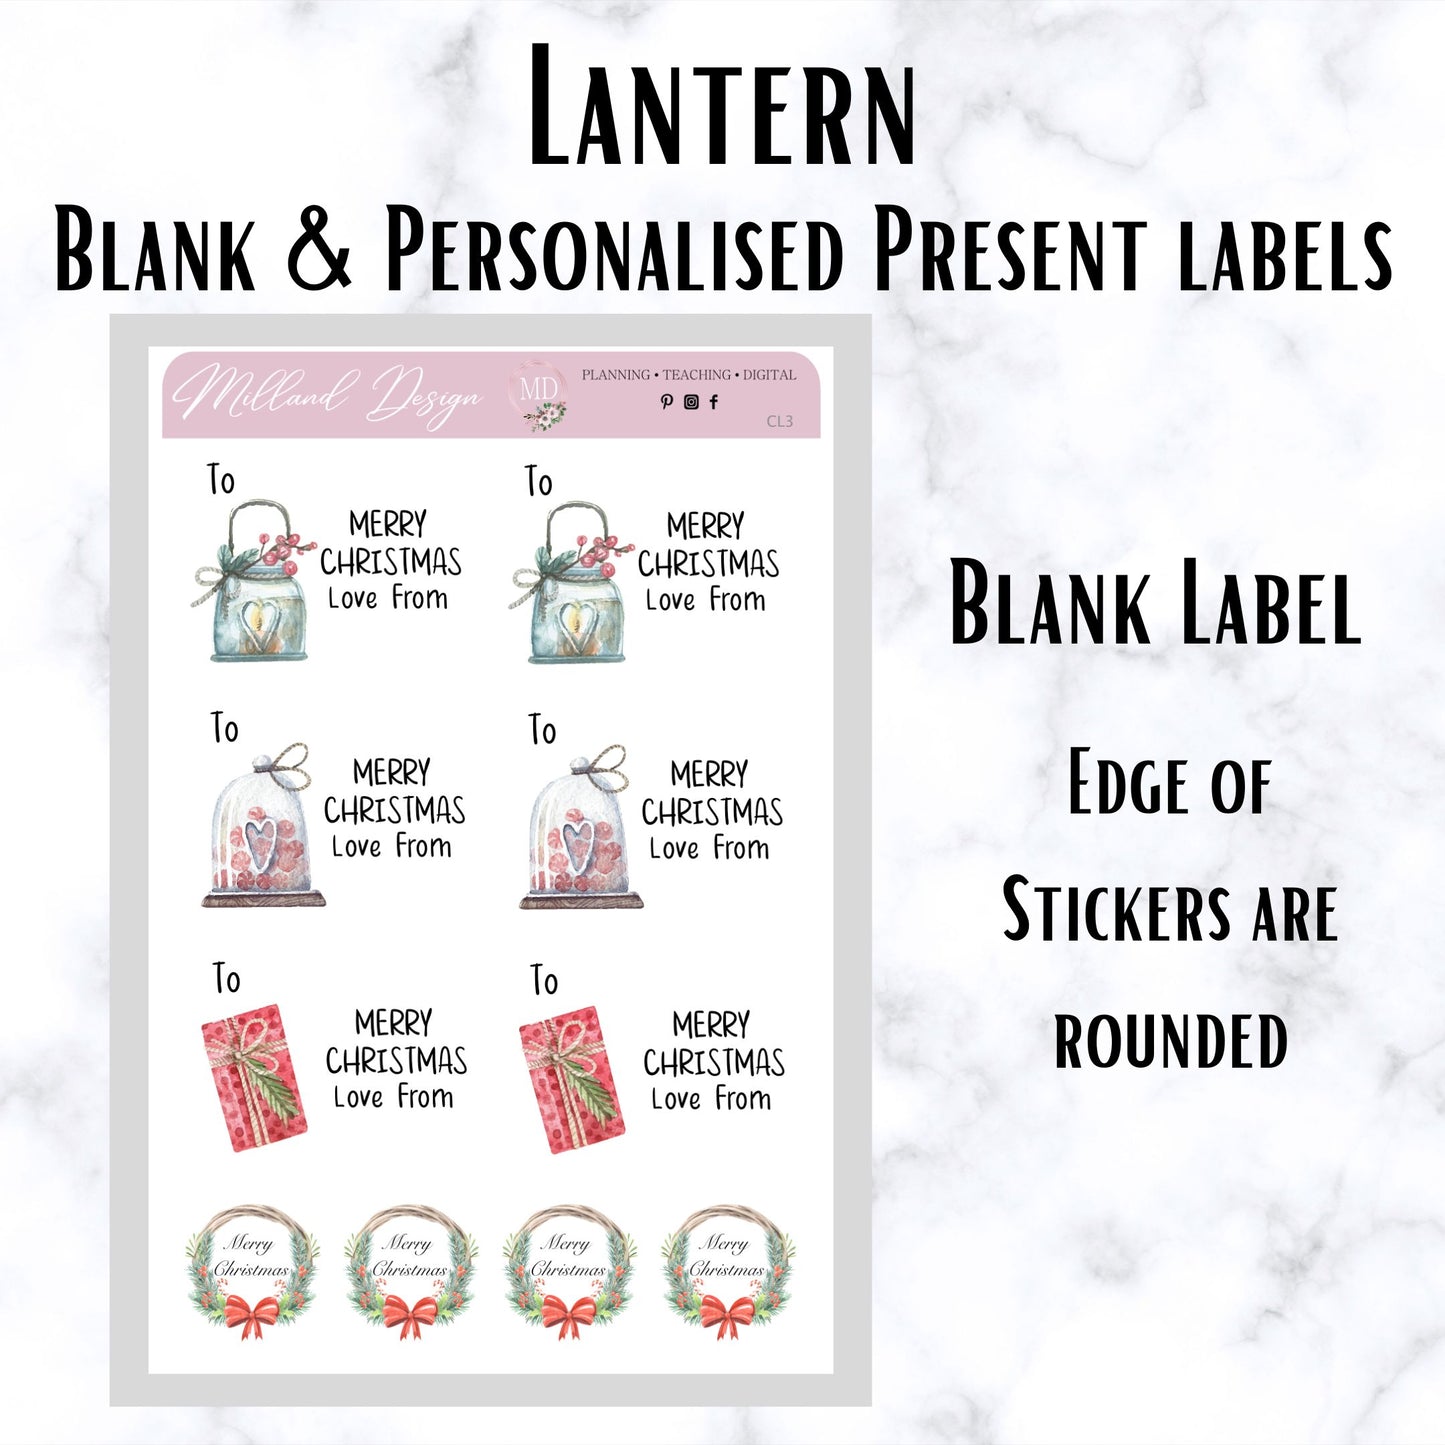 Lantern Blank & Personalised Christmas Present Labels